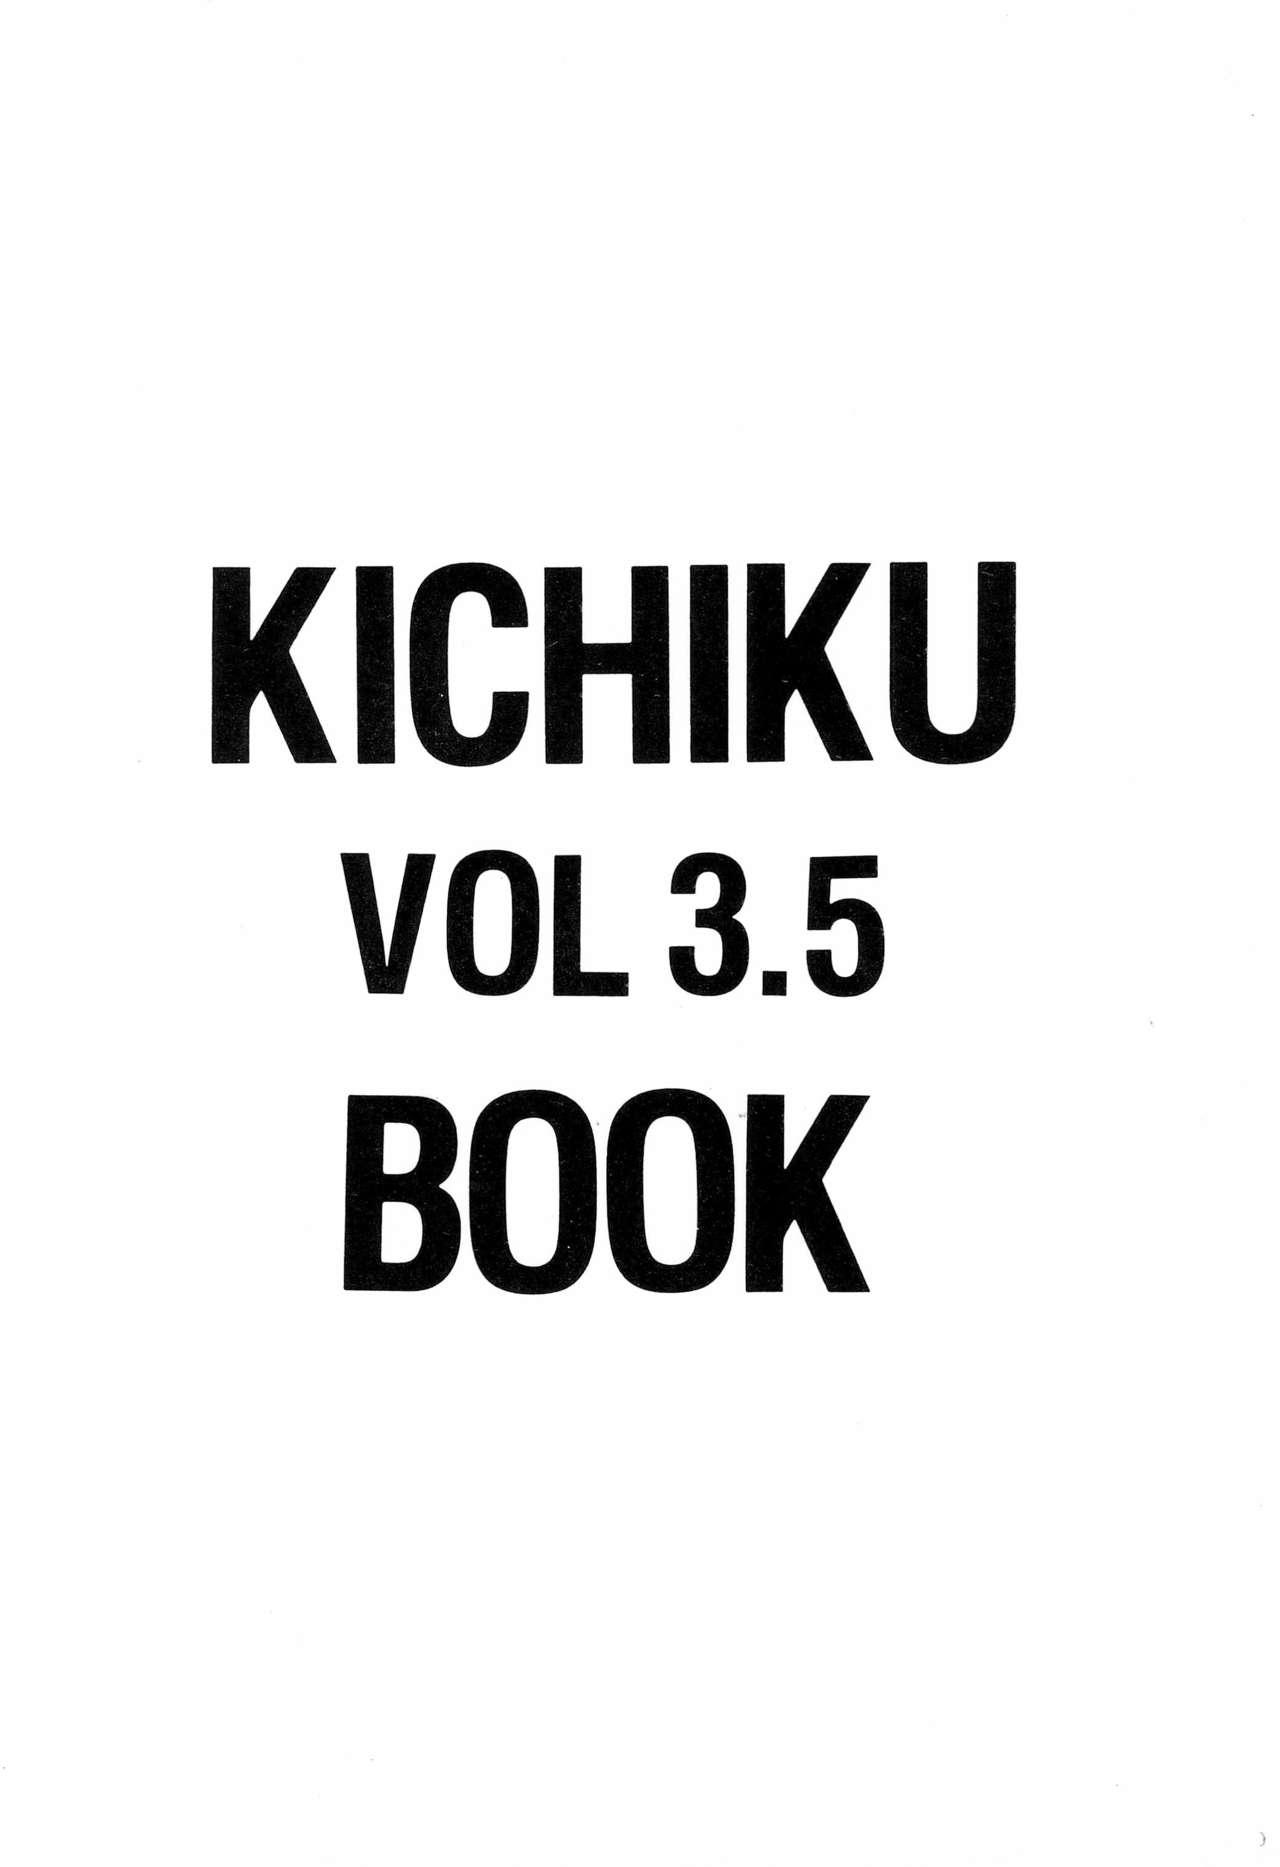 KICHIKUBOOK VOL3.5 27